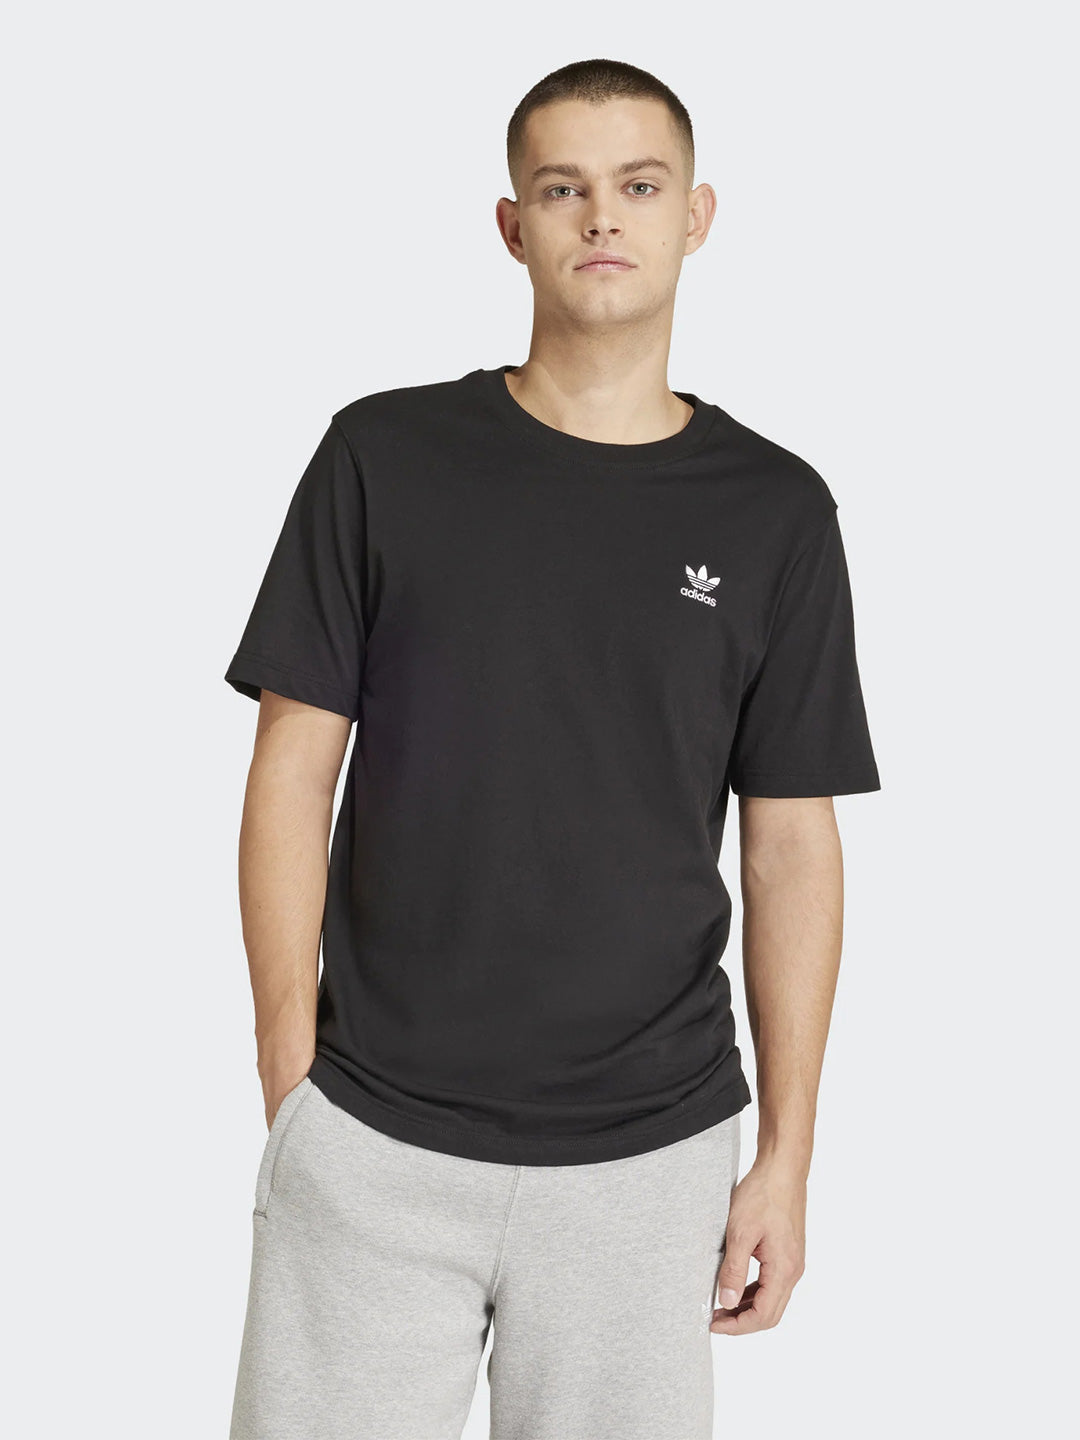 Adidas Trefoil Essential t-shirt nero basic con logo